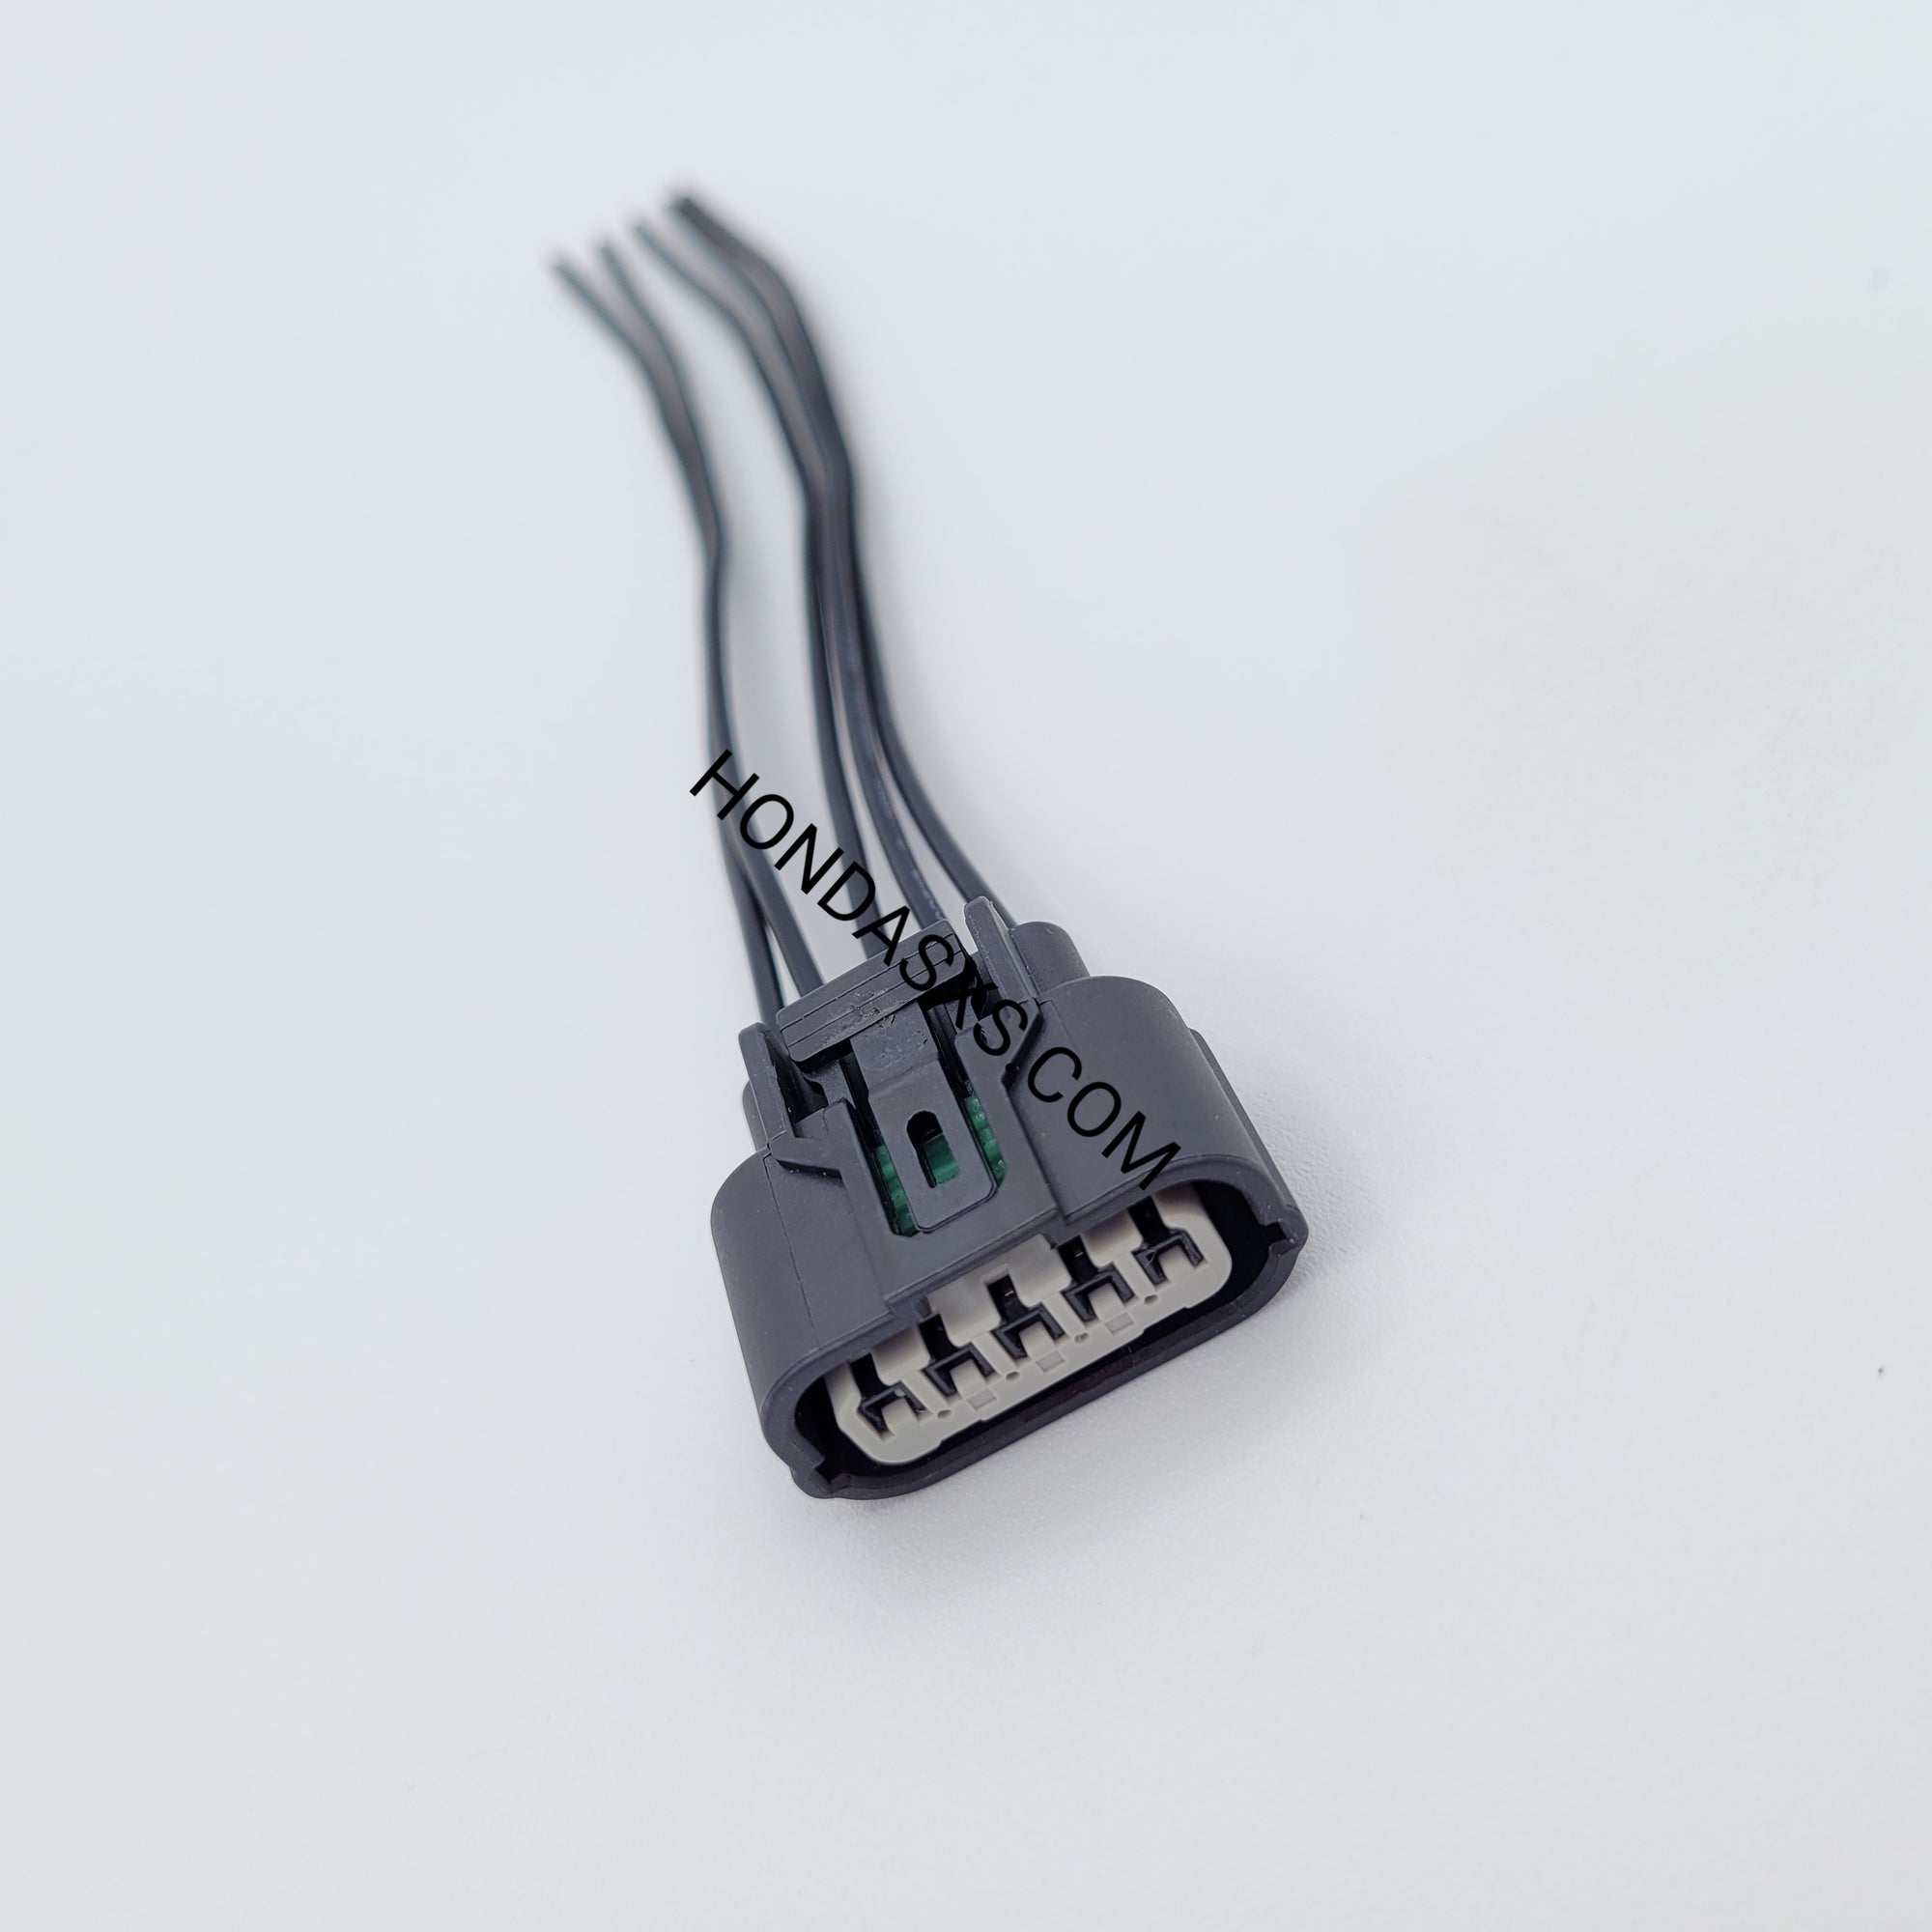 5 pin MAP sensor connector for Honda Pioneer, Honda Talon. Pigtail or Pin kit.